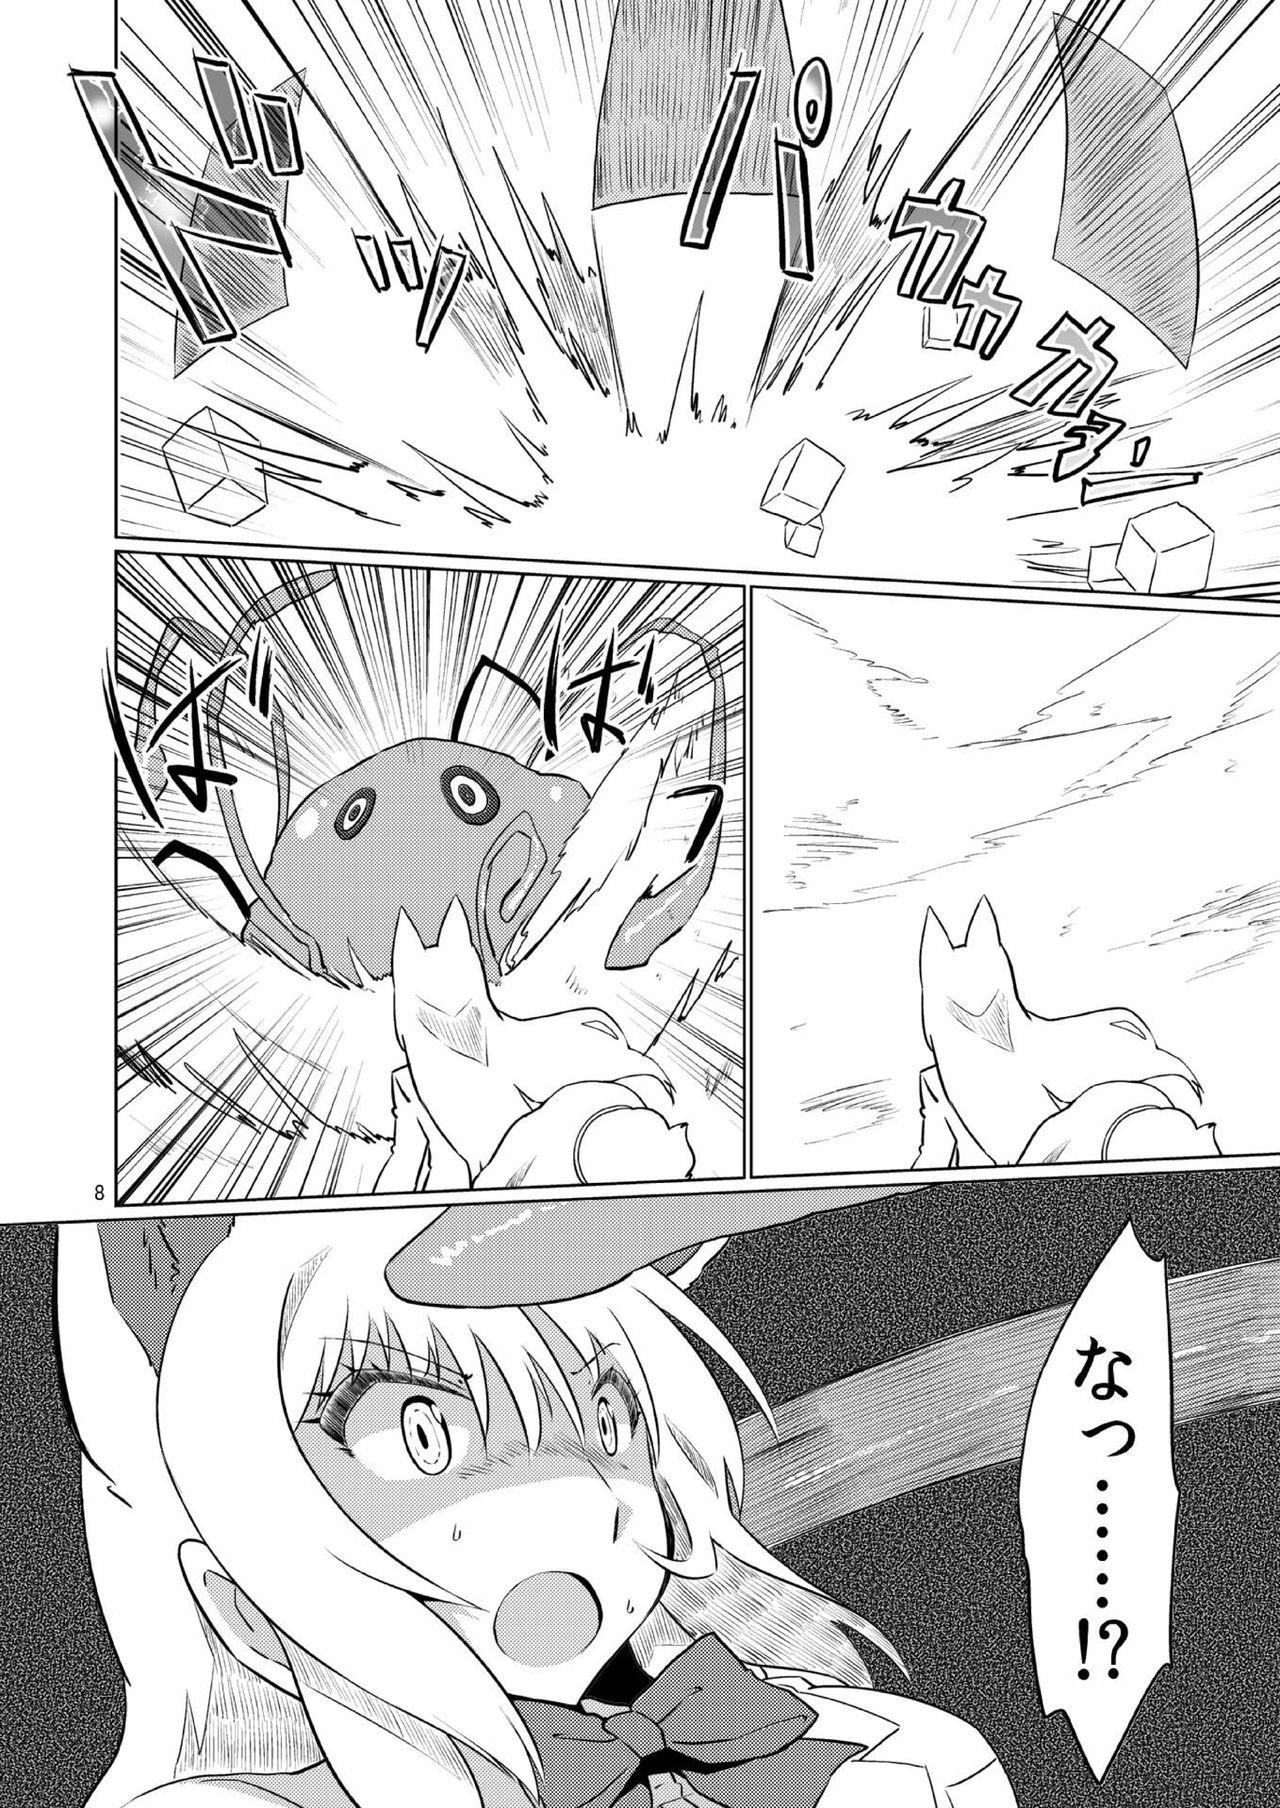 Beurette Oinarisama vs Shokushu - Kemono friends Namorada - Page 8